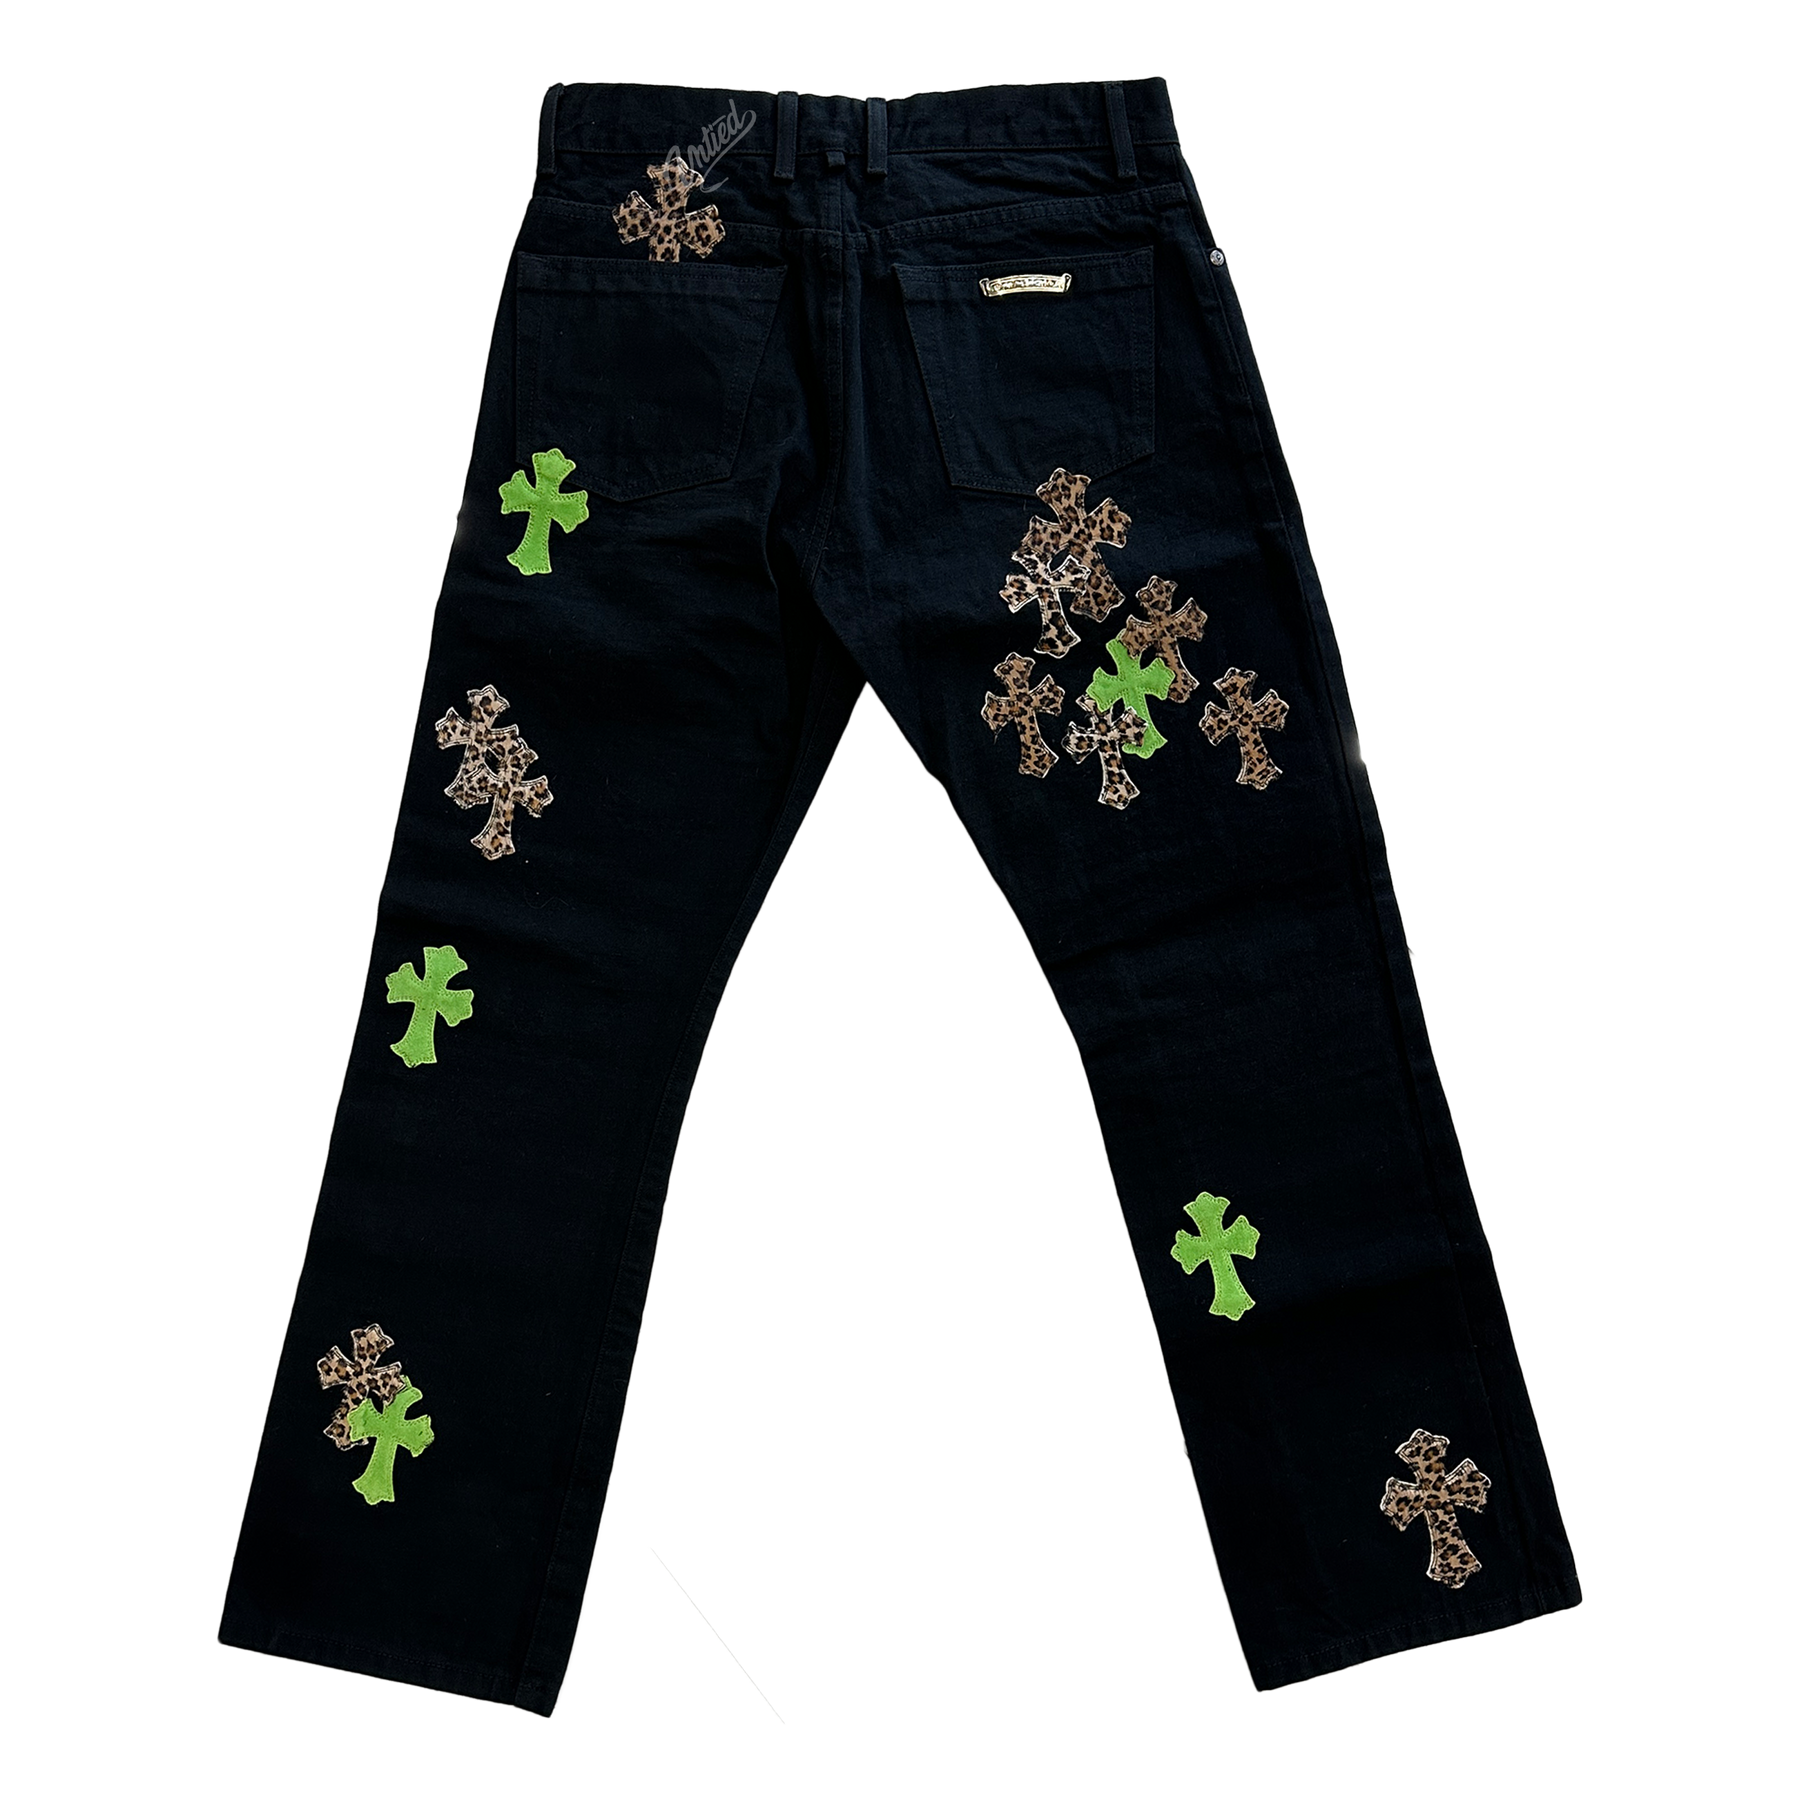 Chrome Hearts Green/Cheetah Cross Denim Jeans "Black"